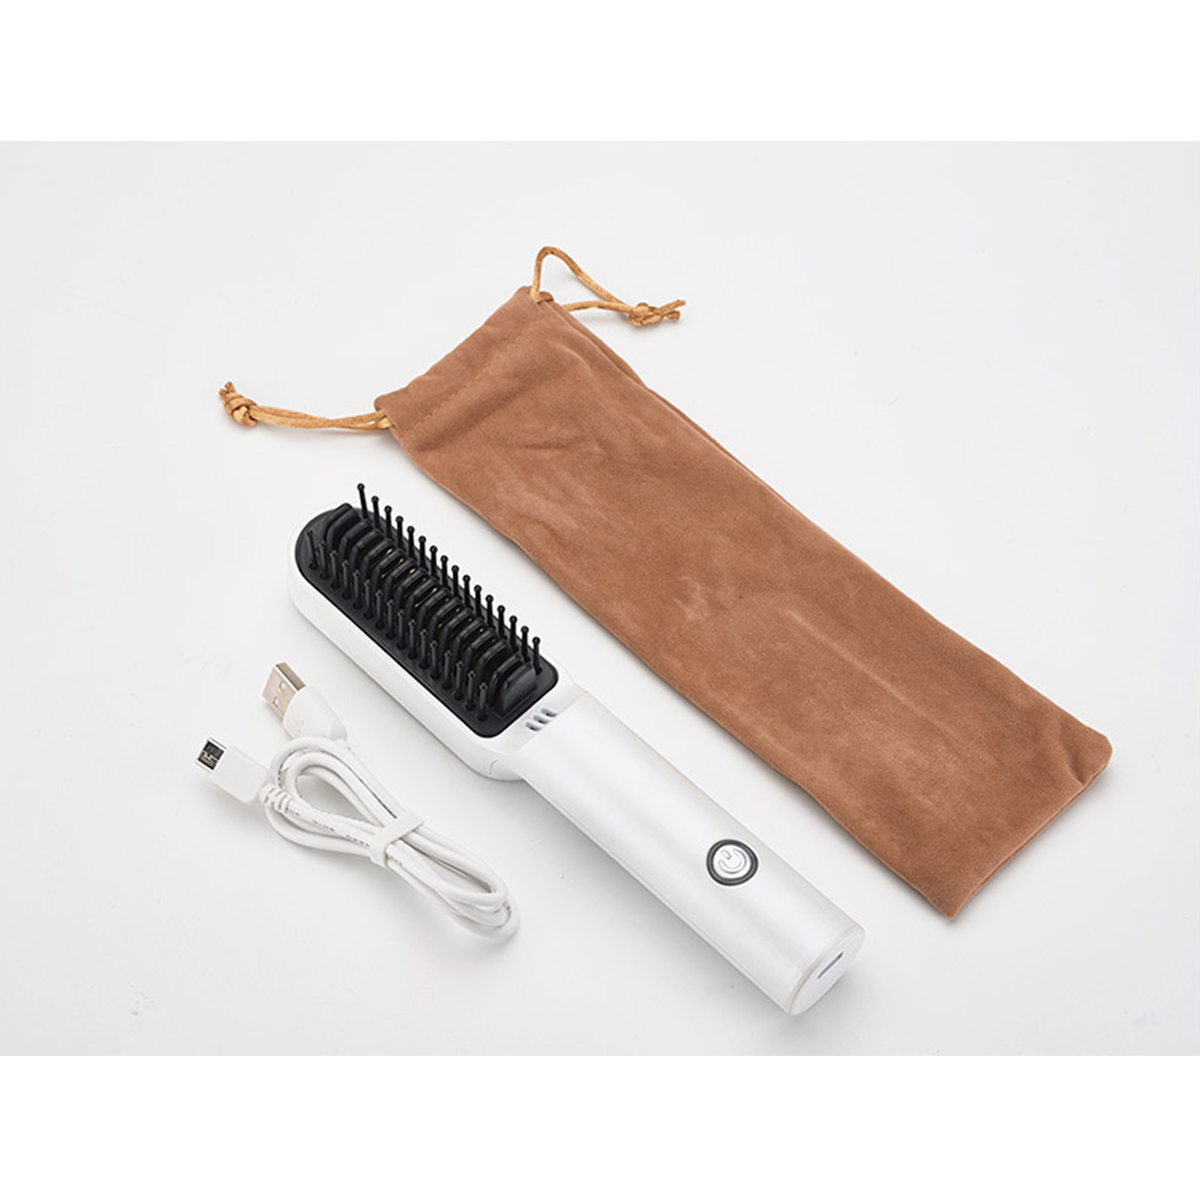 SHAOKE Mini USB-Wiederaufladbarer Haarglätter Konstante Haarglätter, Erwärmung Temperaturstufen: 1 200℃ & Schnelle Lockenstab